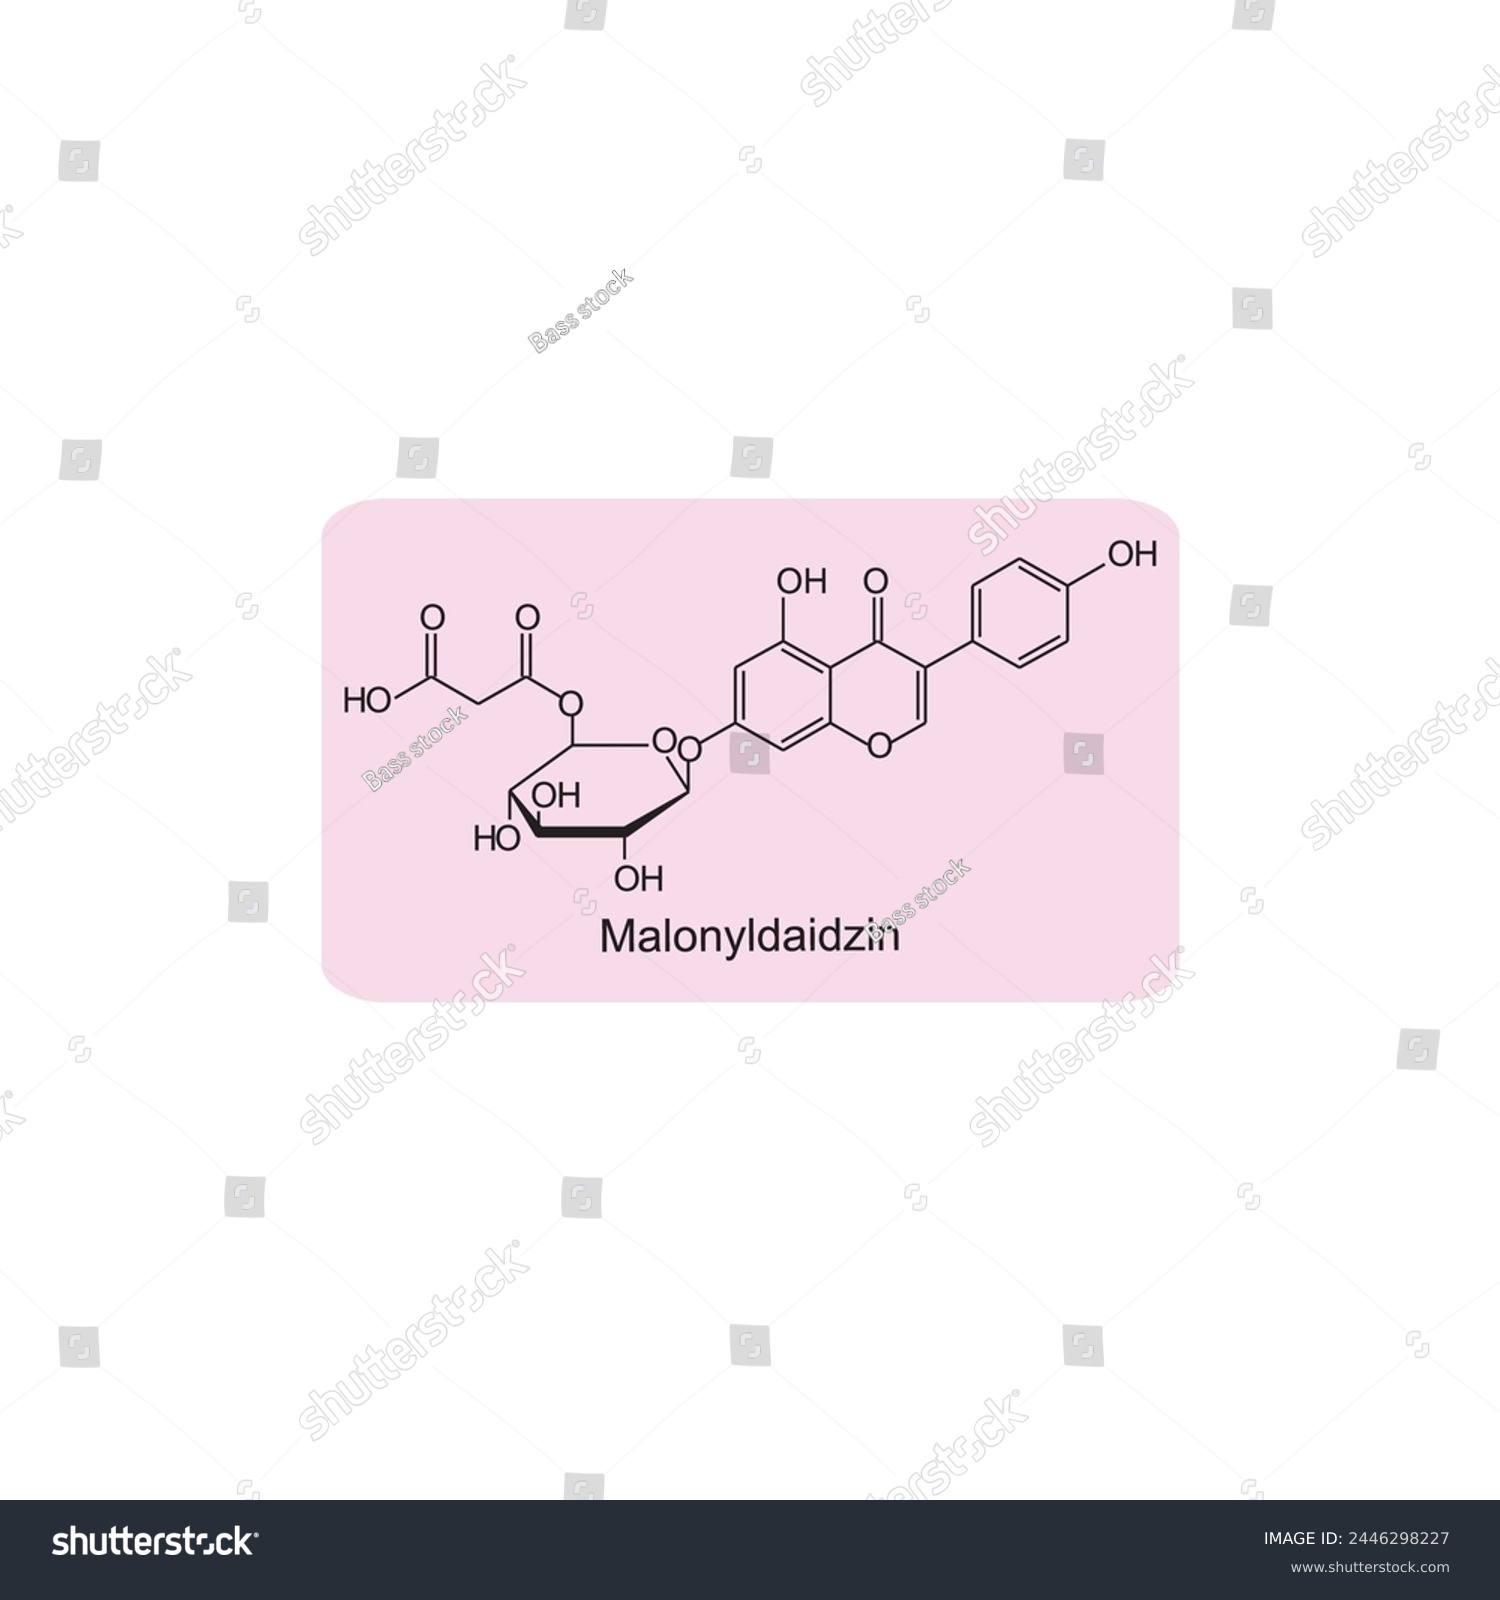 SVG of Malonylgenistin skeletal structure diagram.Isoflavanone compound molecule scientific illustration on pink background. svg